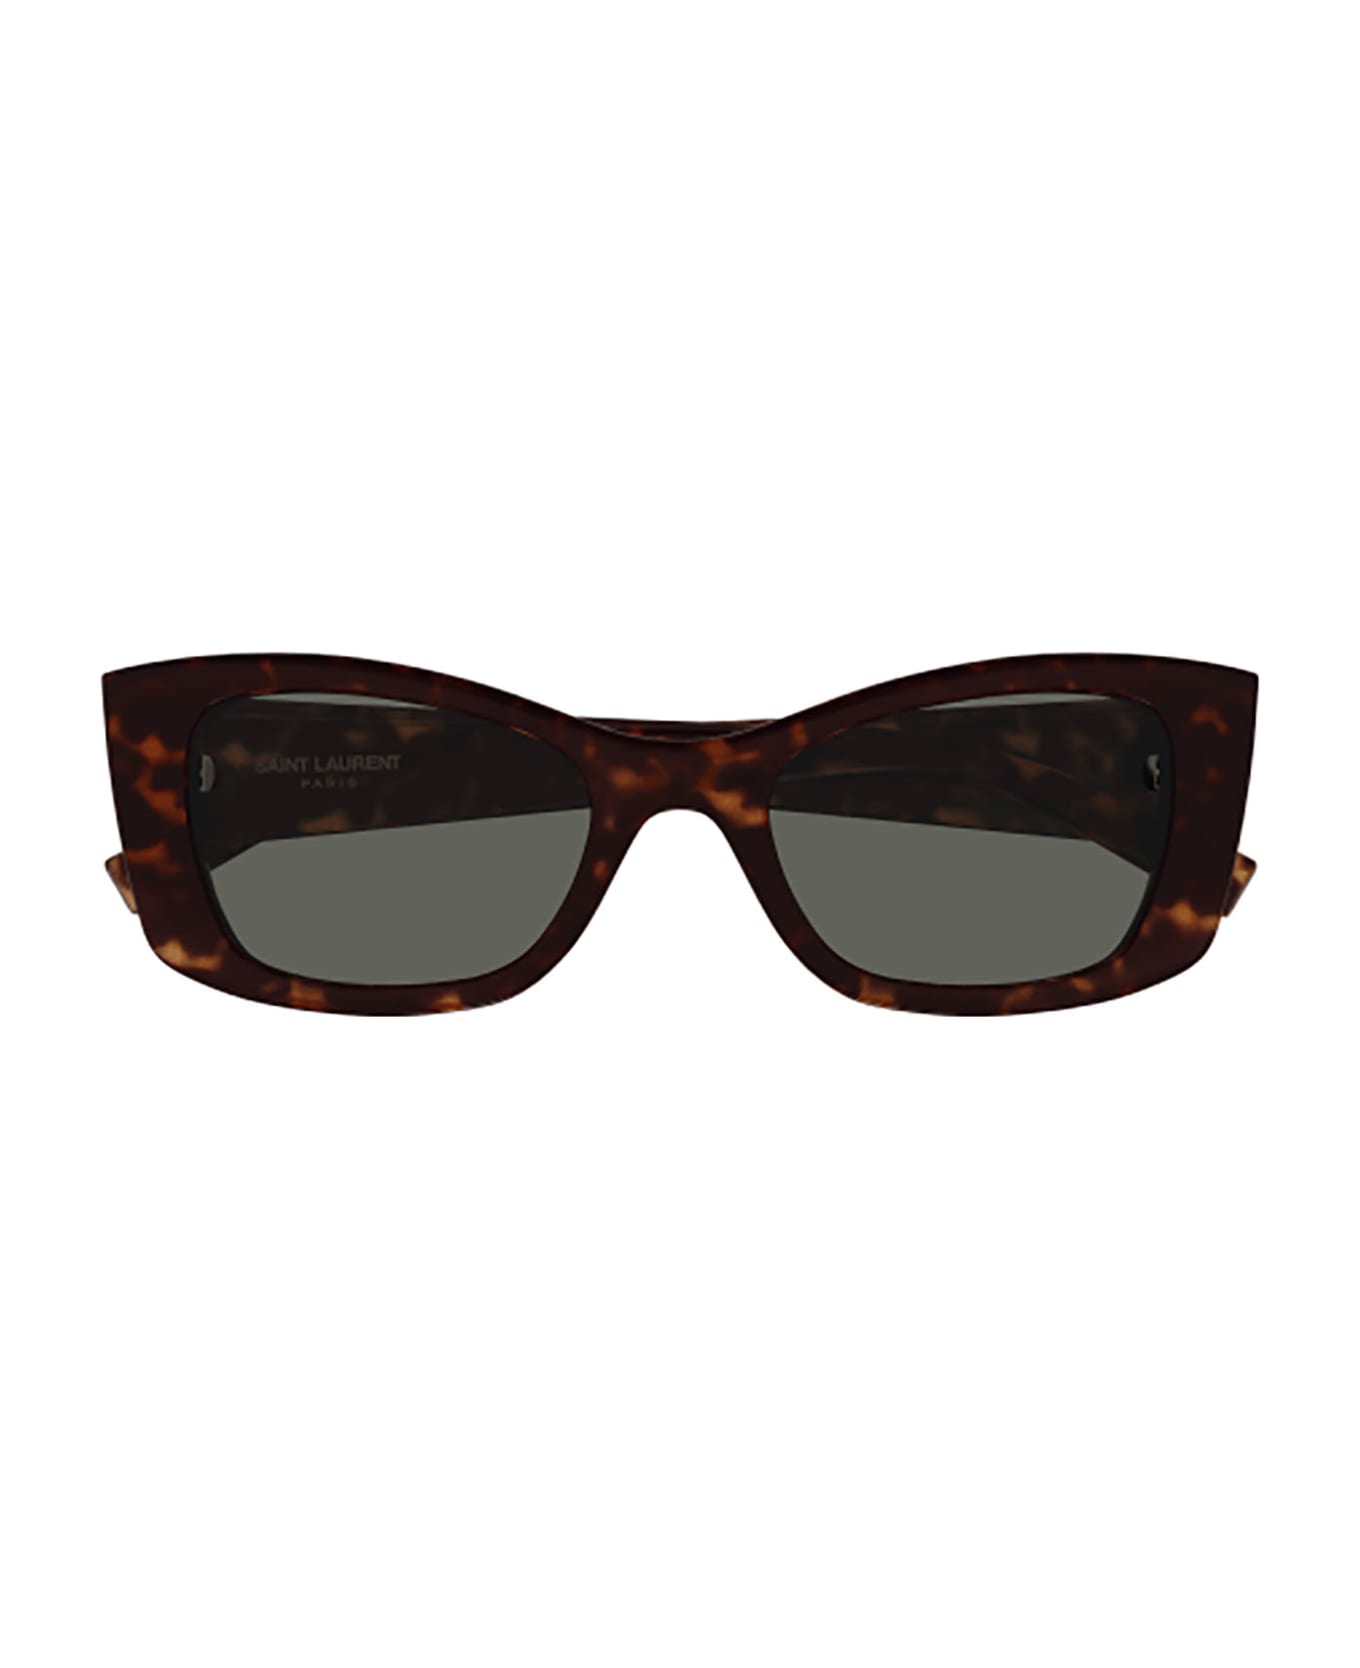 Saint Laurent Eyewear Sl 593 Sunglasses - 002 havana havana grey